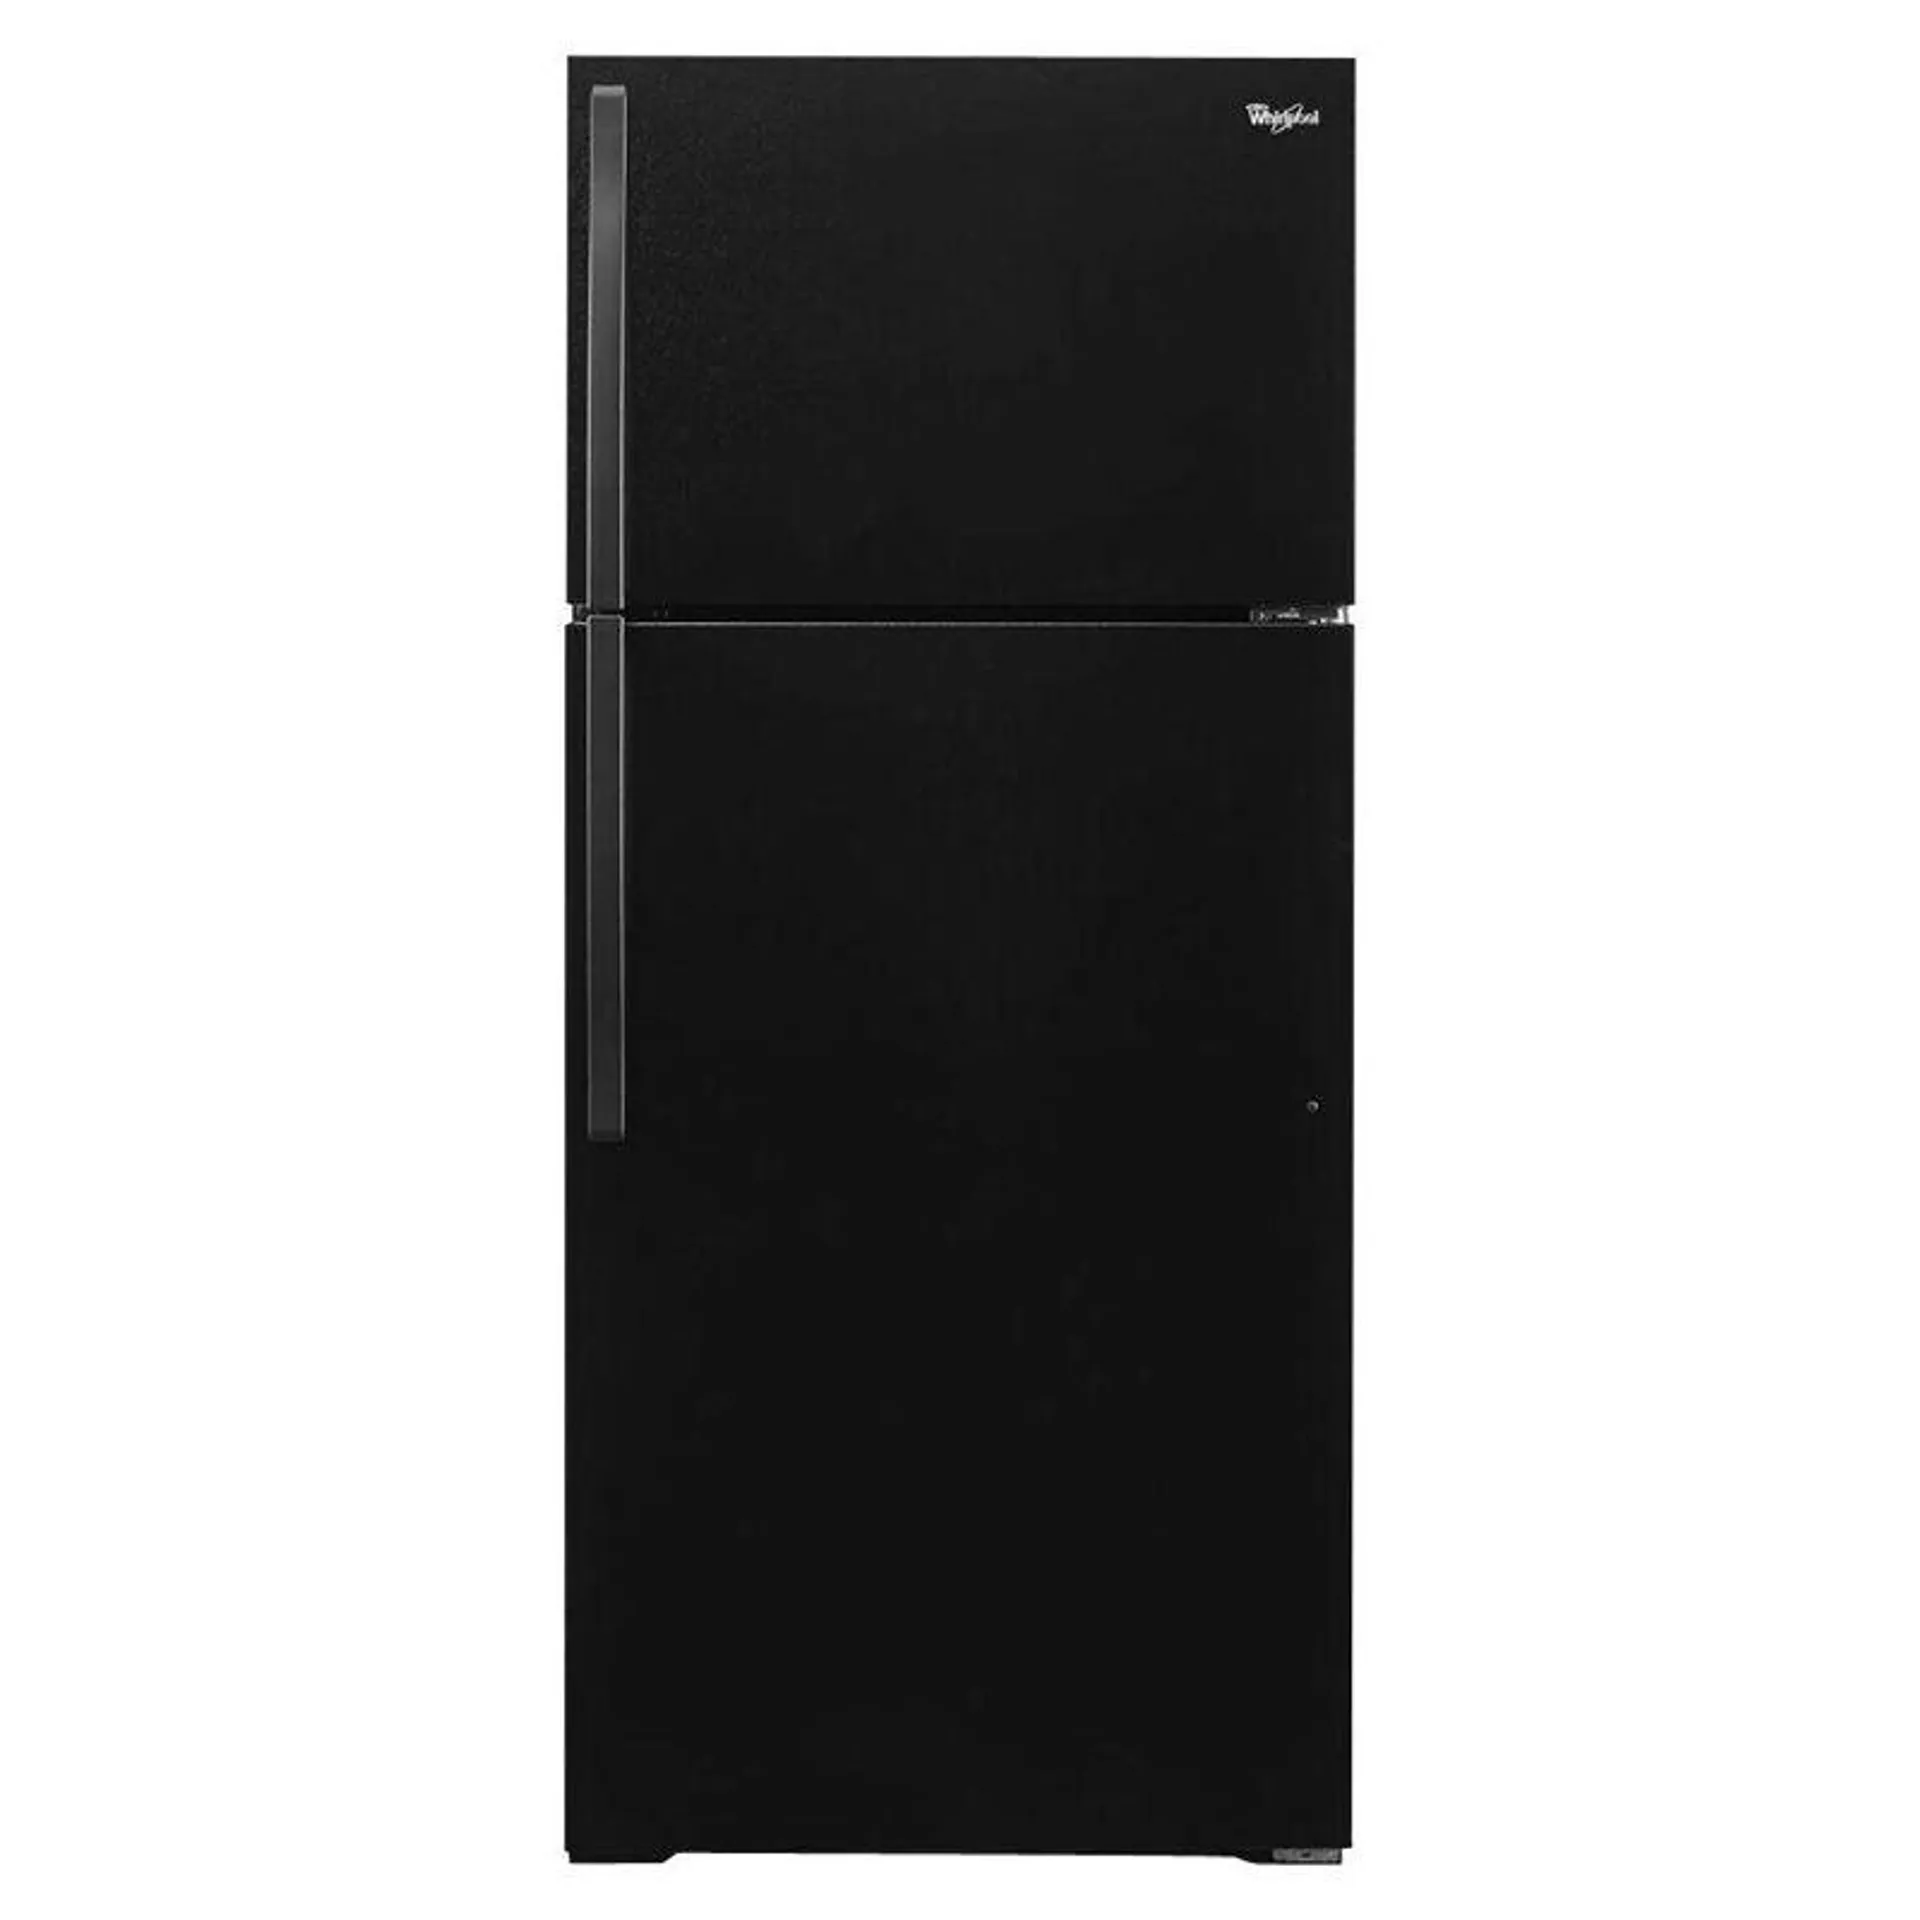 Whirlpool 28 in. 16.0 cu. ft. Top Freezer Refrigerator - Black